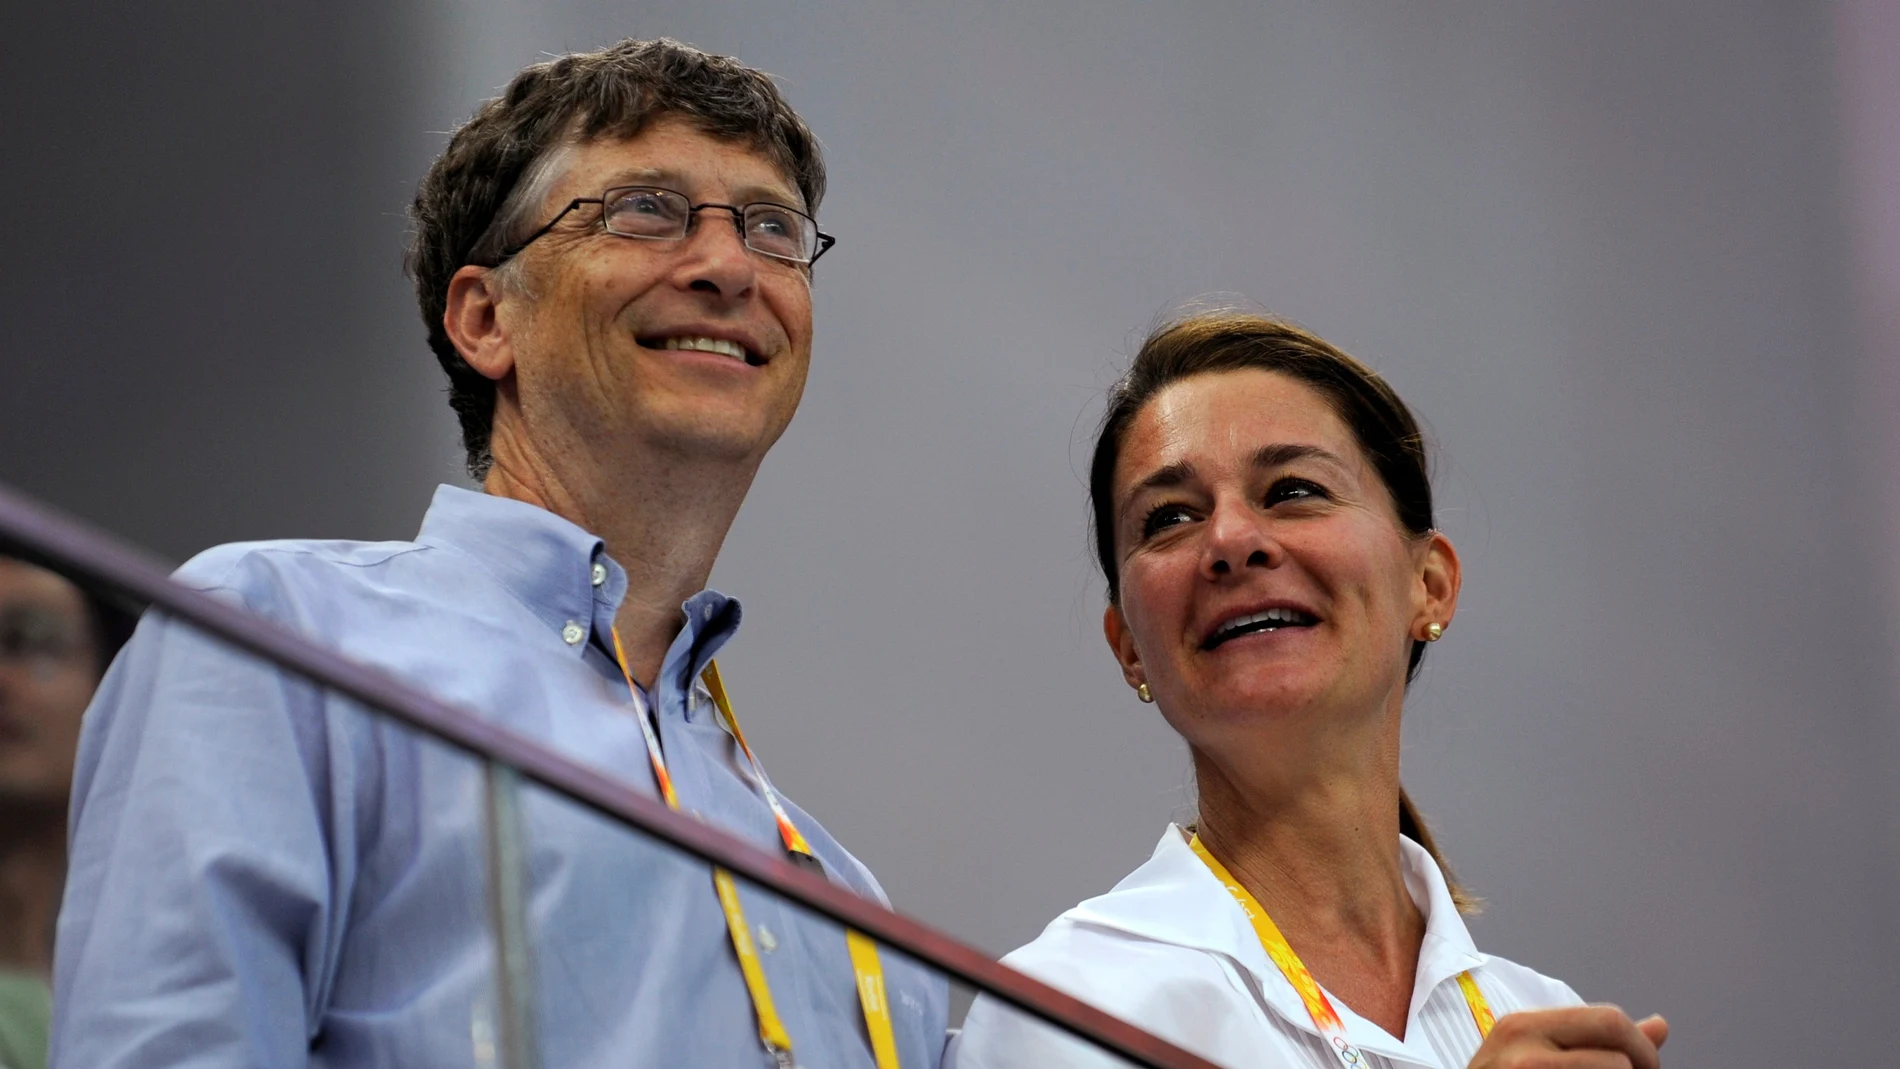 Bill y Melinda Gates se divorcian tras 27 años de matrimonio. REUTERS/Kai Pfaffenbach/File Photo